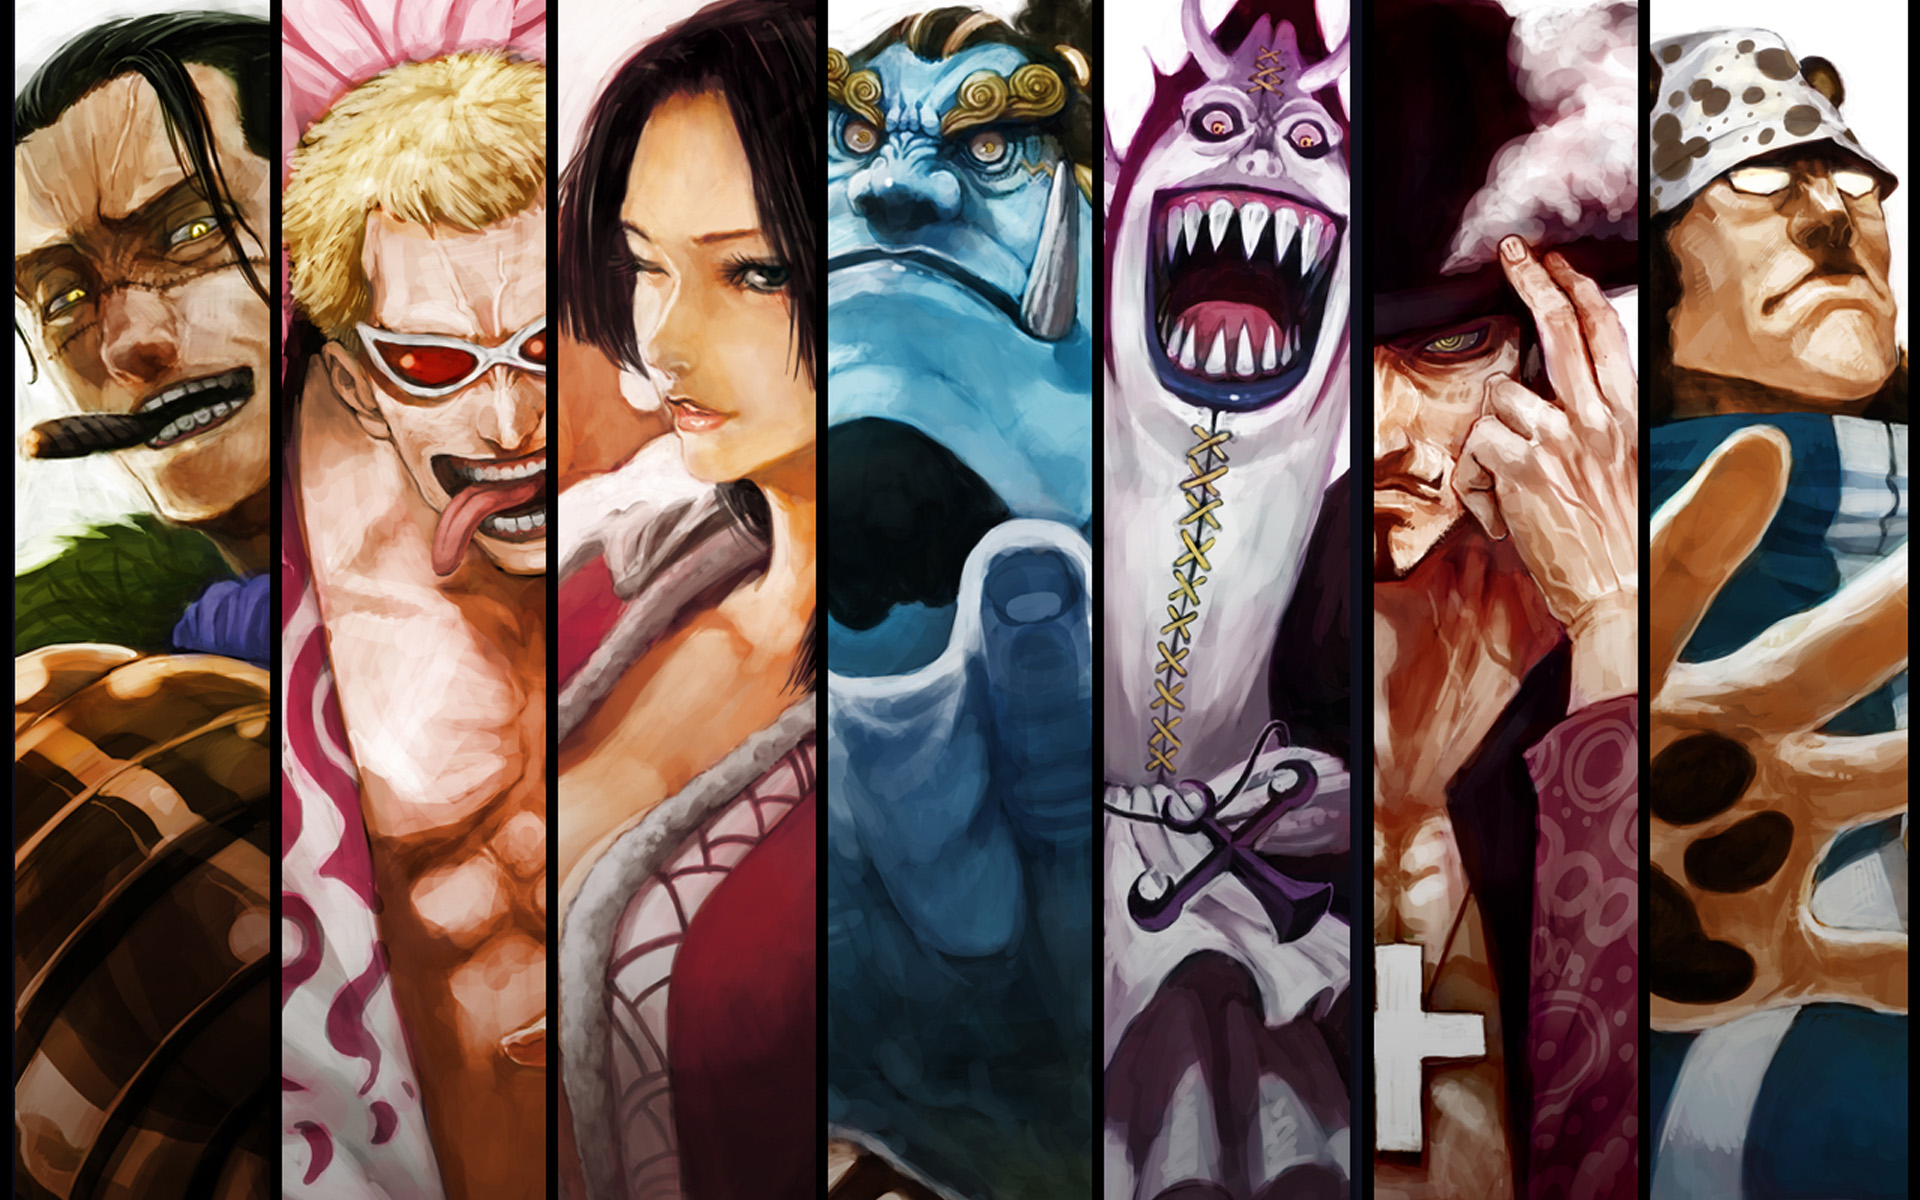 Shichibukai from One Piece, including Crocodile, Doflamingo, Hancock, Jinbe, Moriah, Mihawk, and Kuma.